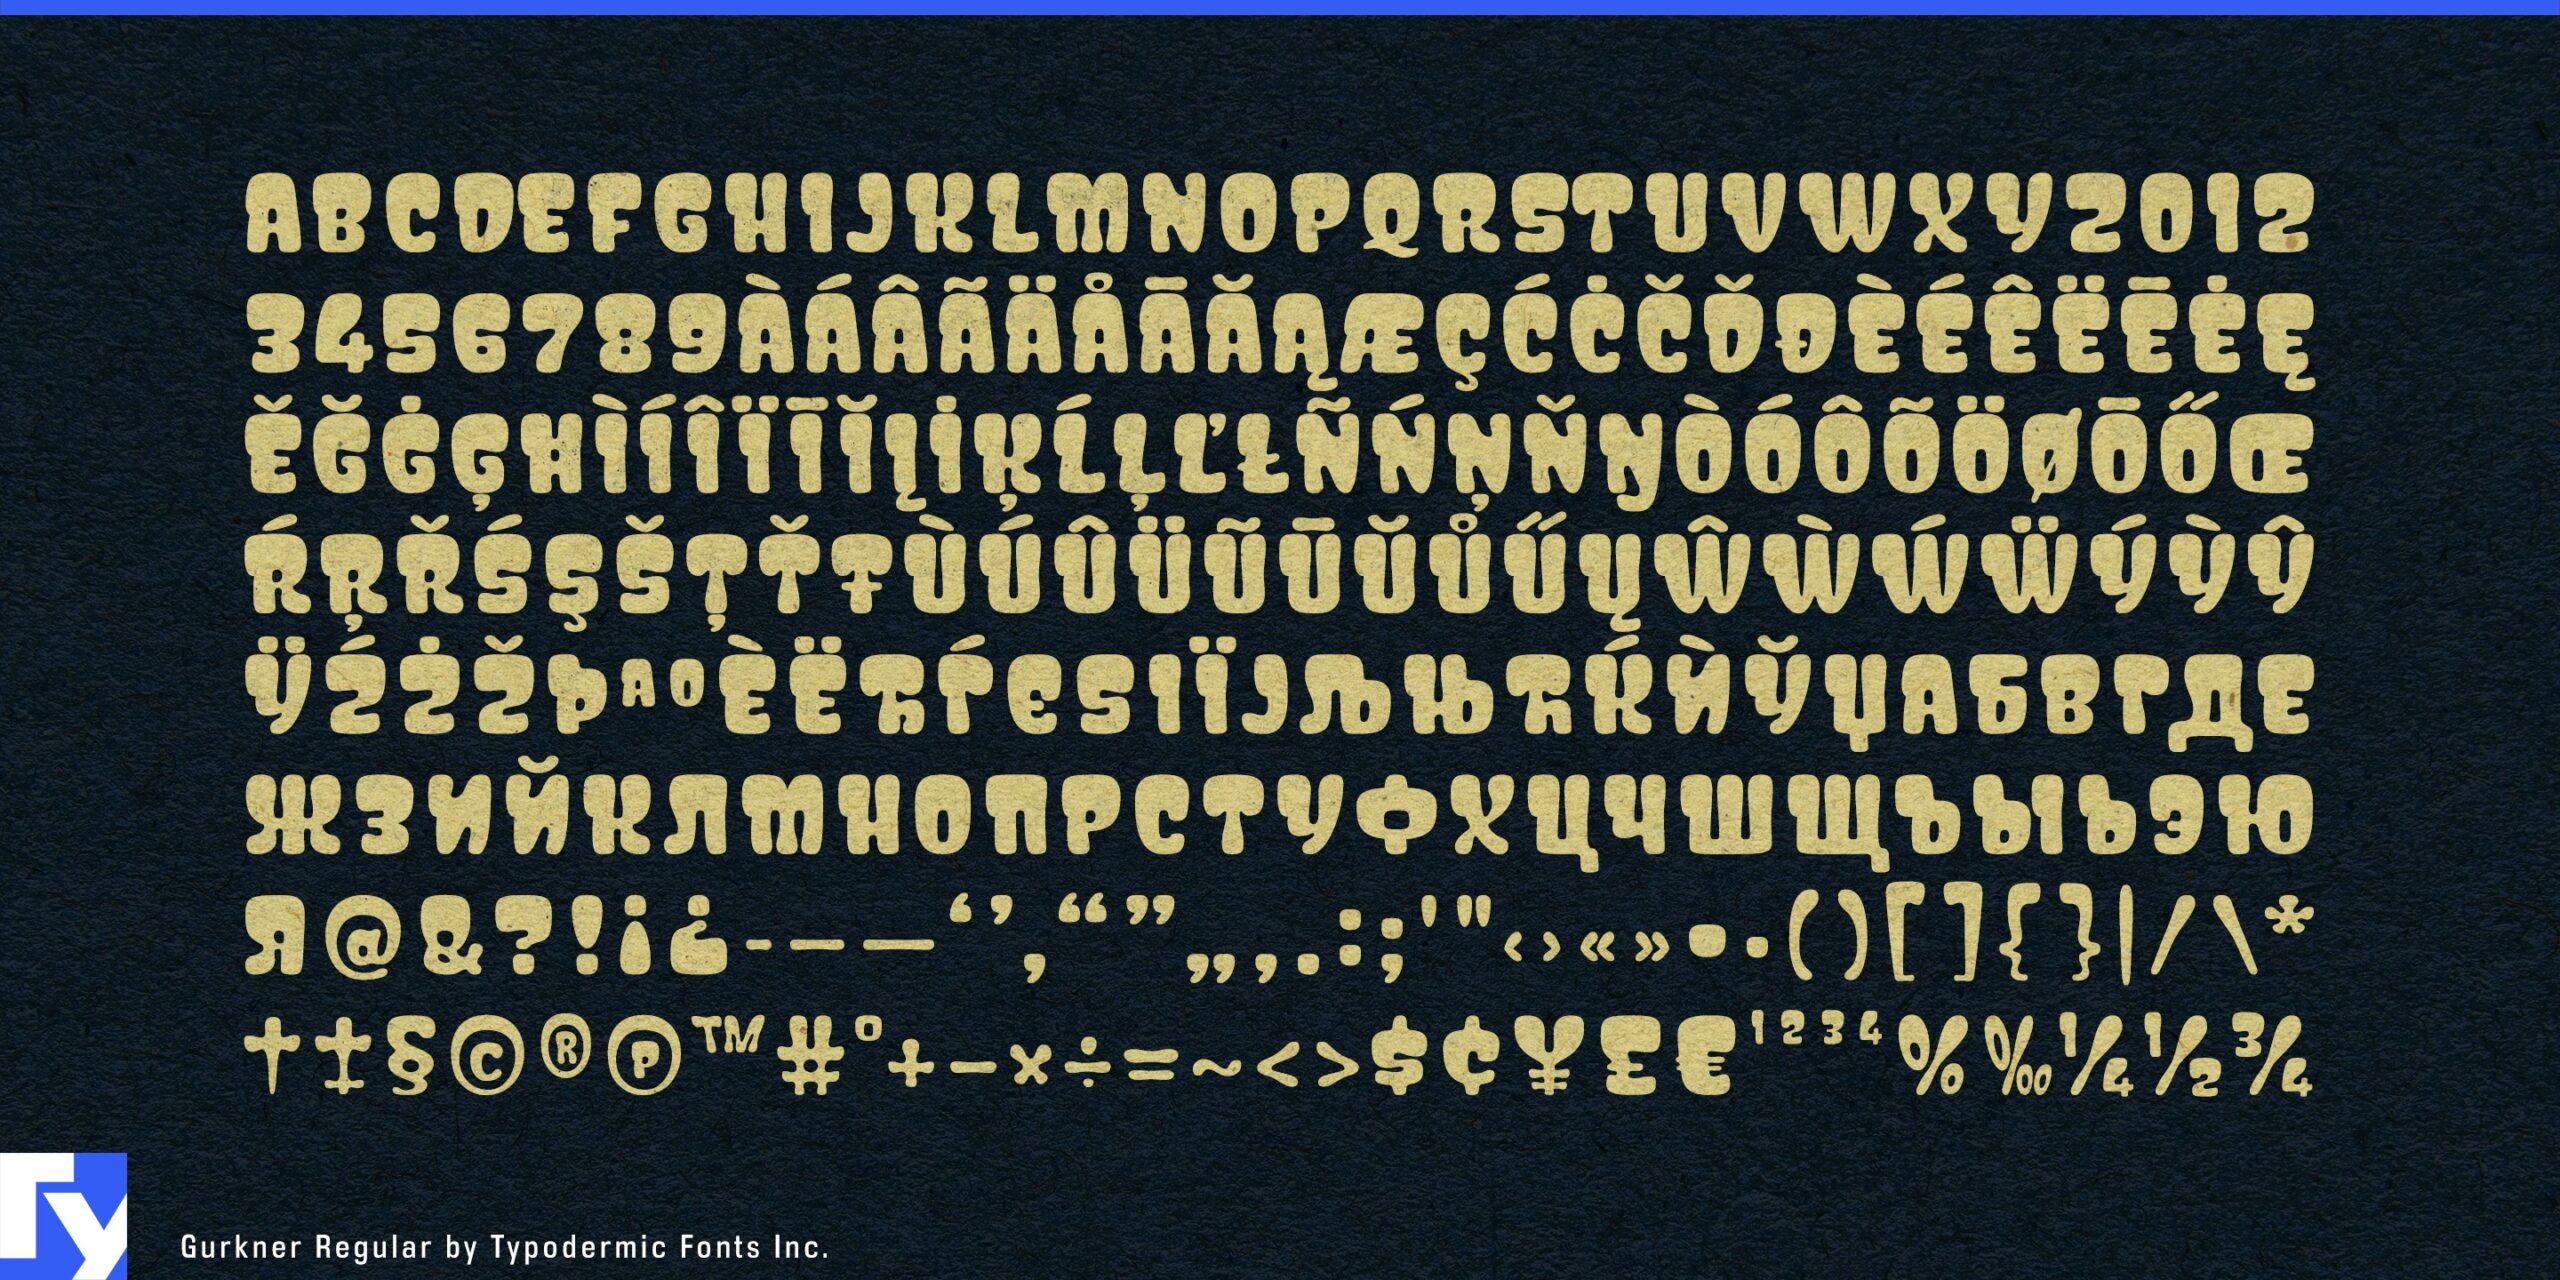 Mischievous Pranks and Bouncing Fun: Unleash the Poltergeist of Gurkner Typeface